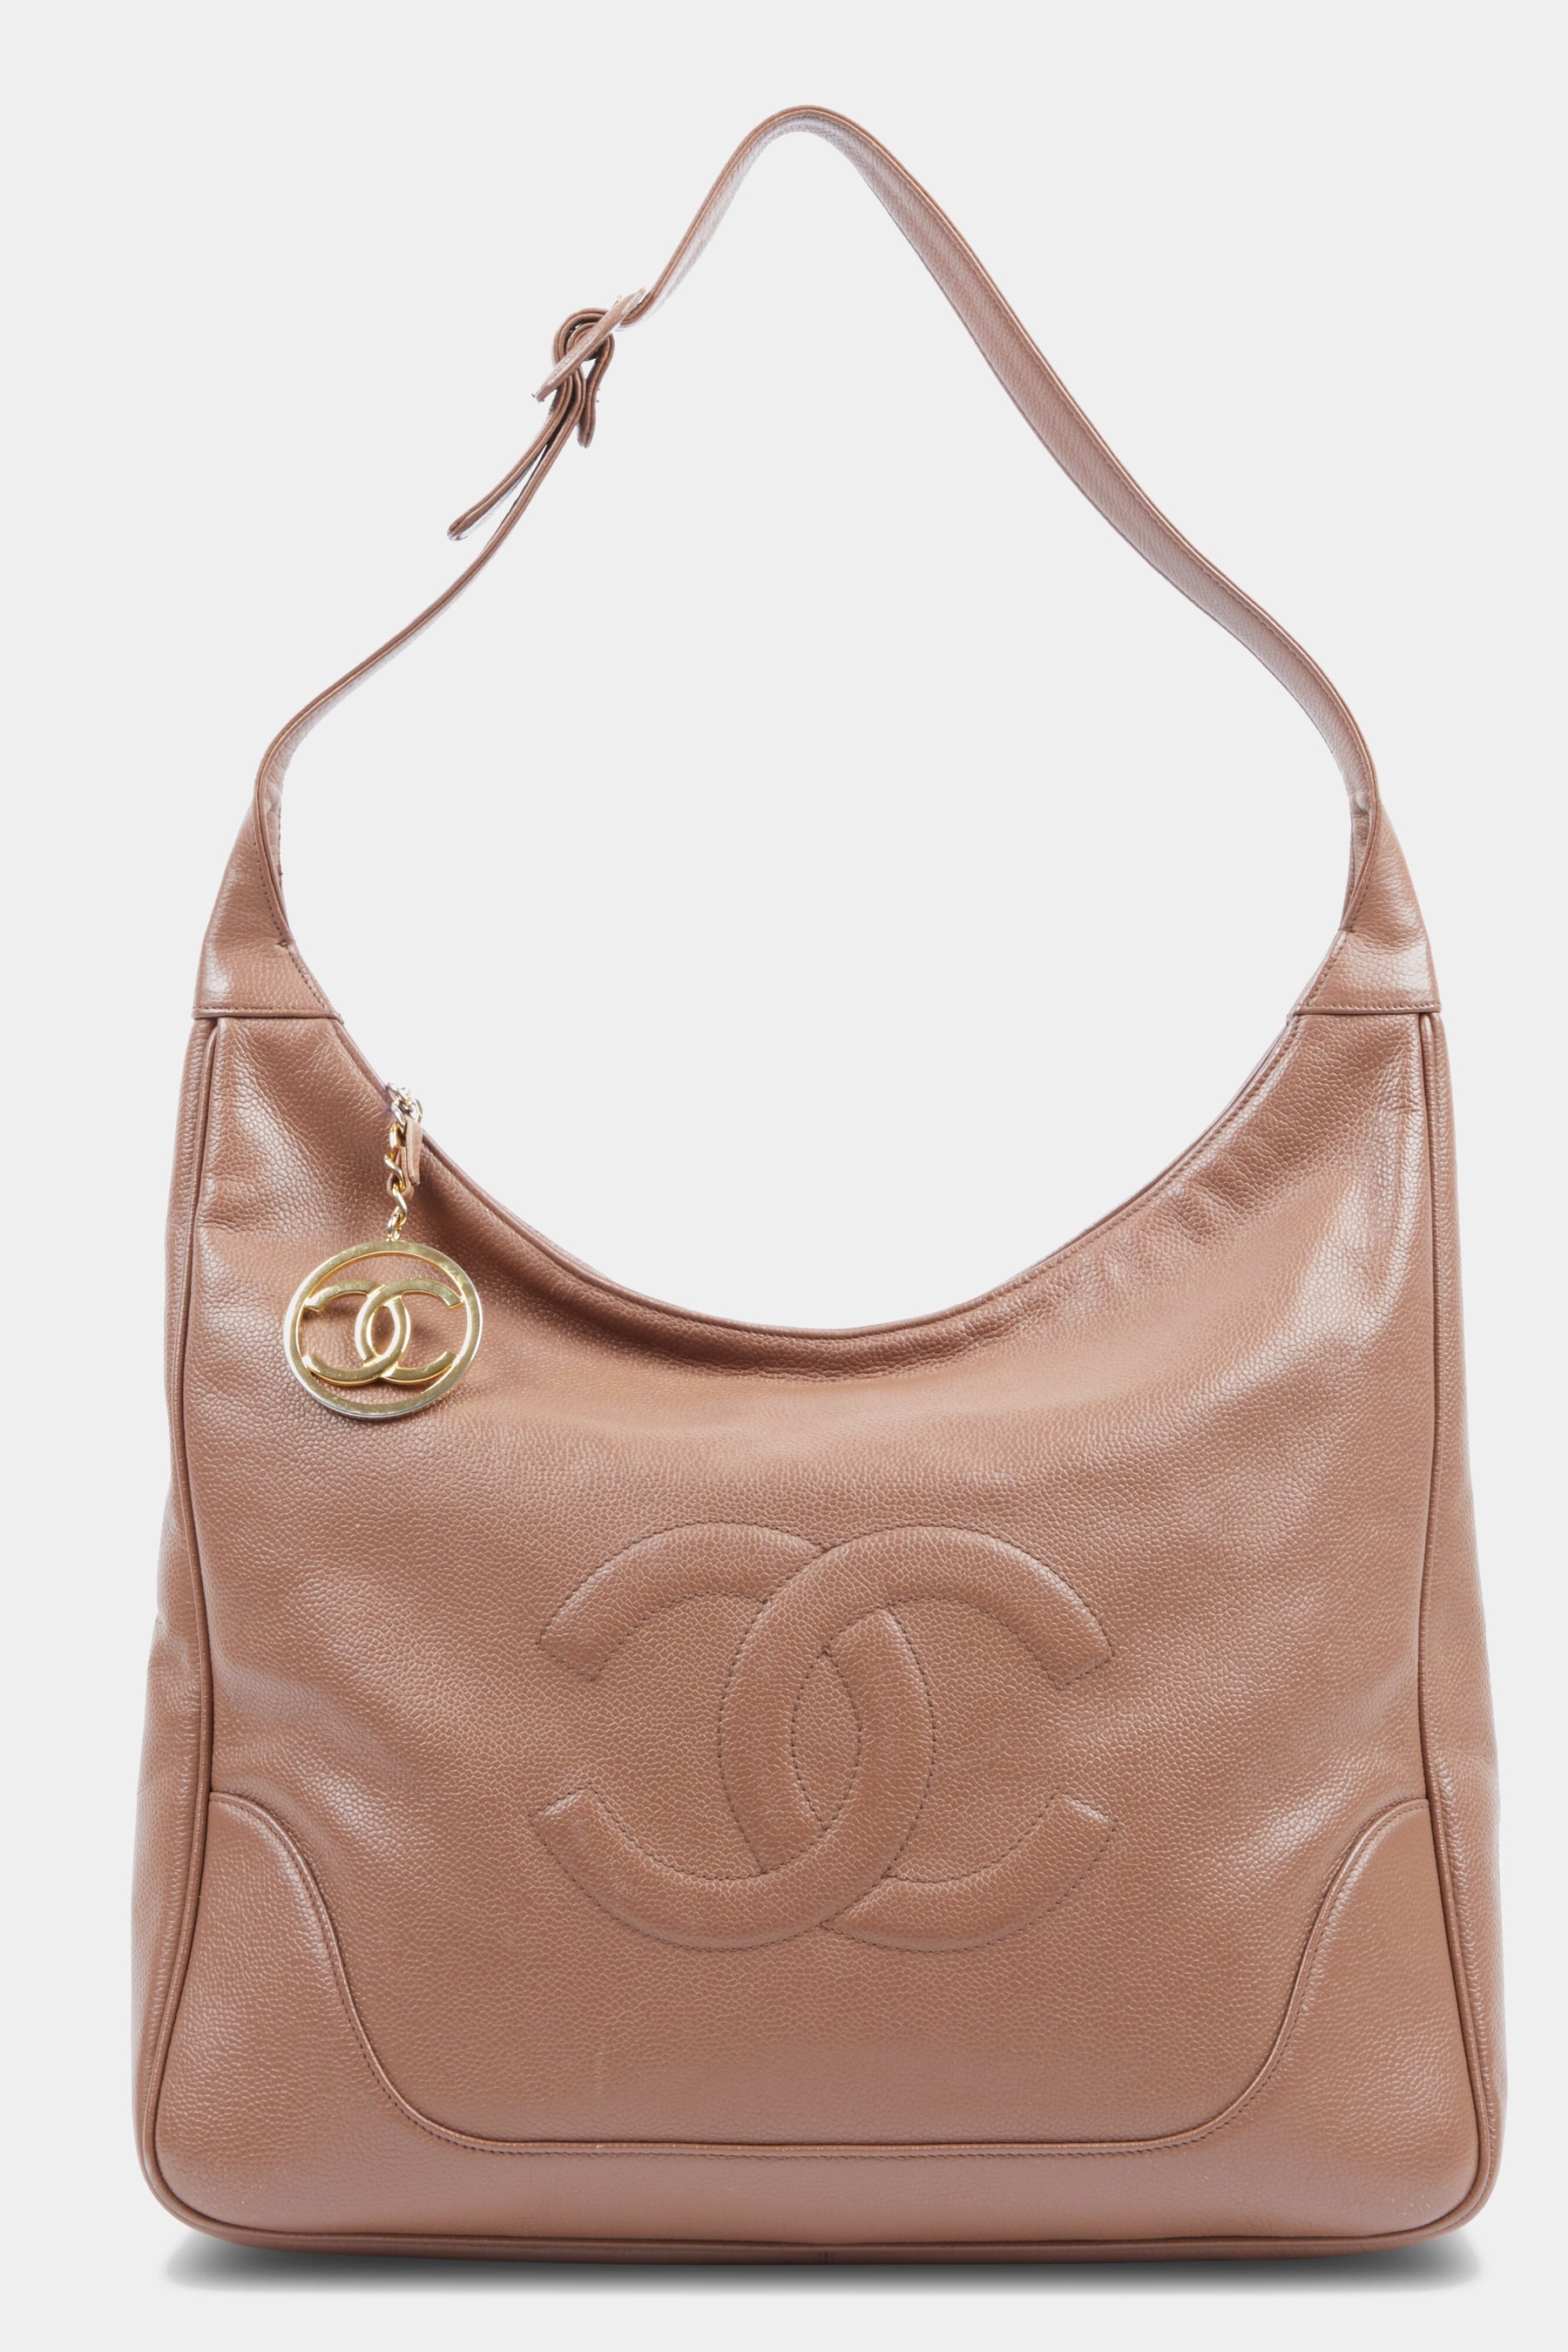 Chanel Cc Hobo Caviar Bag in Brown